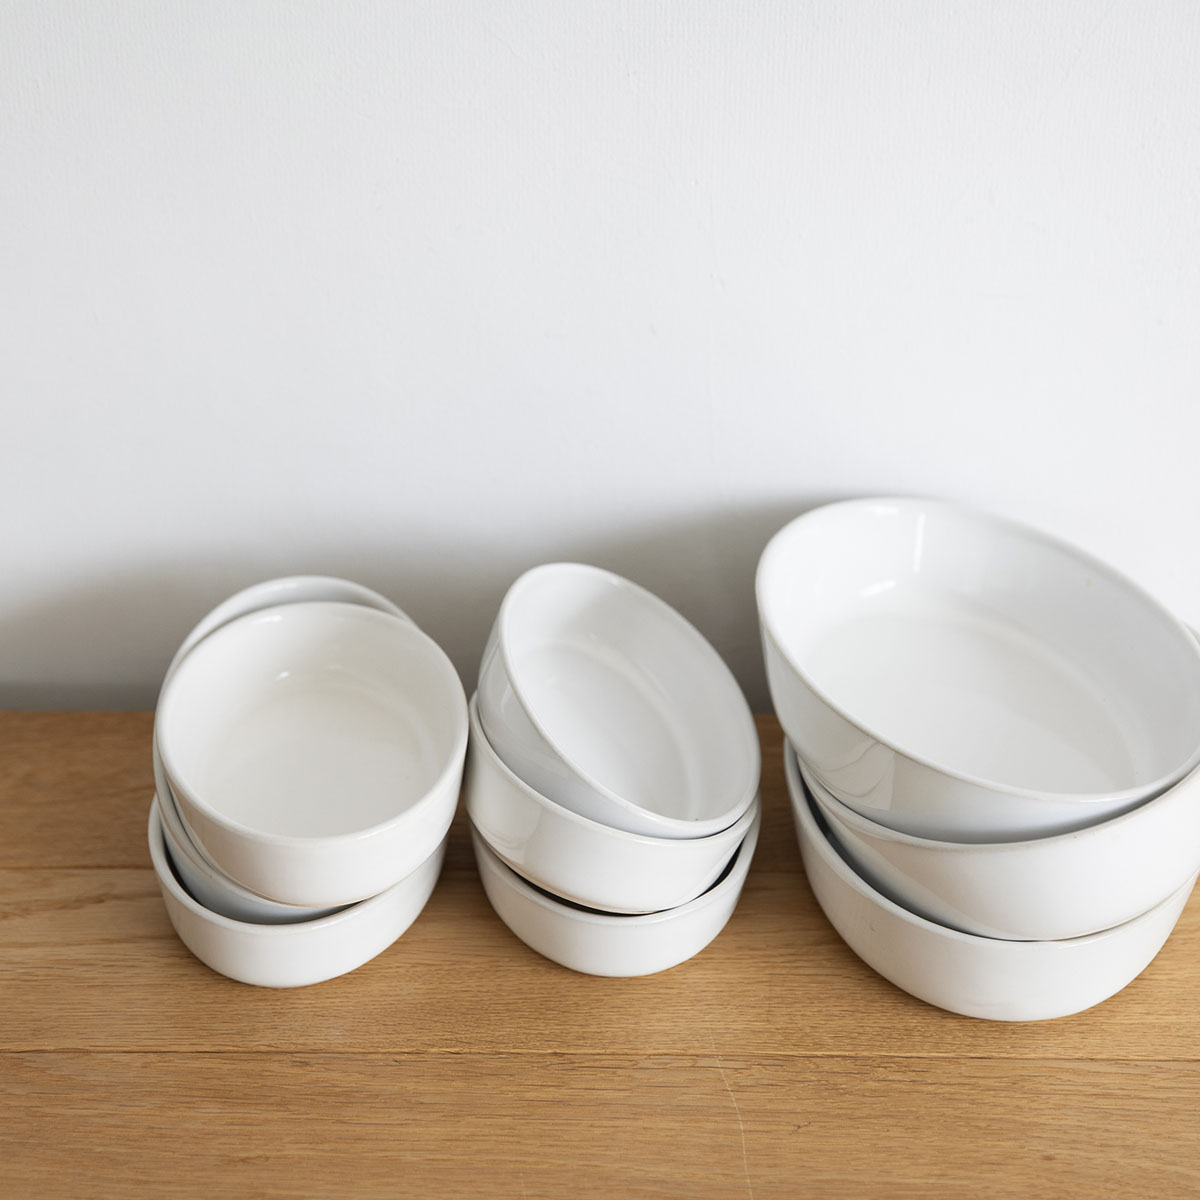 内田鋼一 作 white bowl (白い器) 2 陶器 - 陶芸